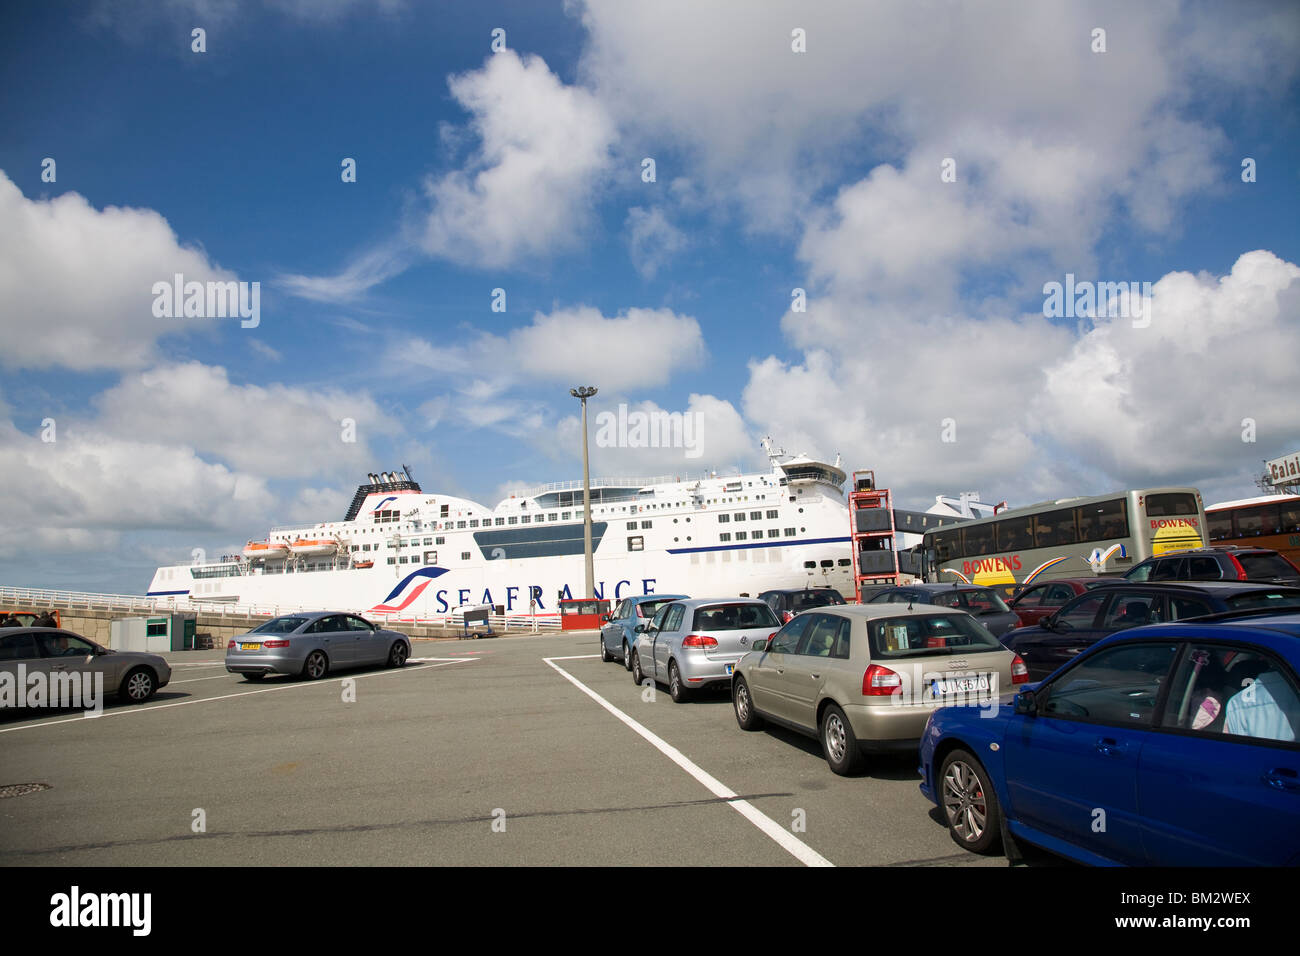 Seafrance car ferry at Calais port, France Stock Photo